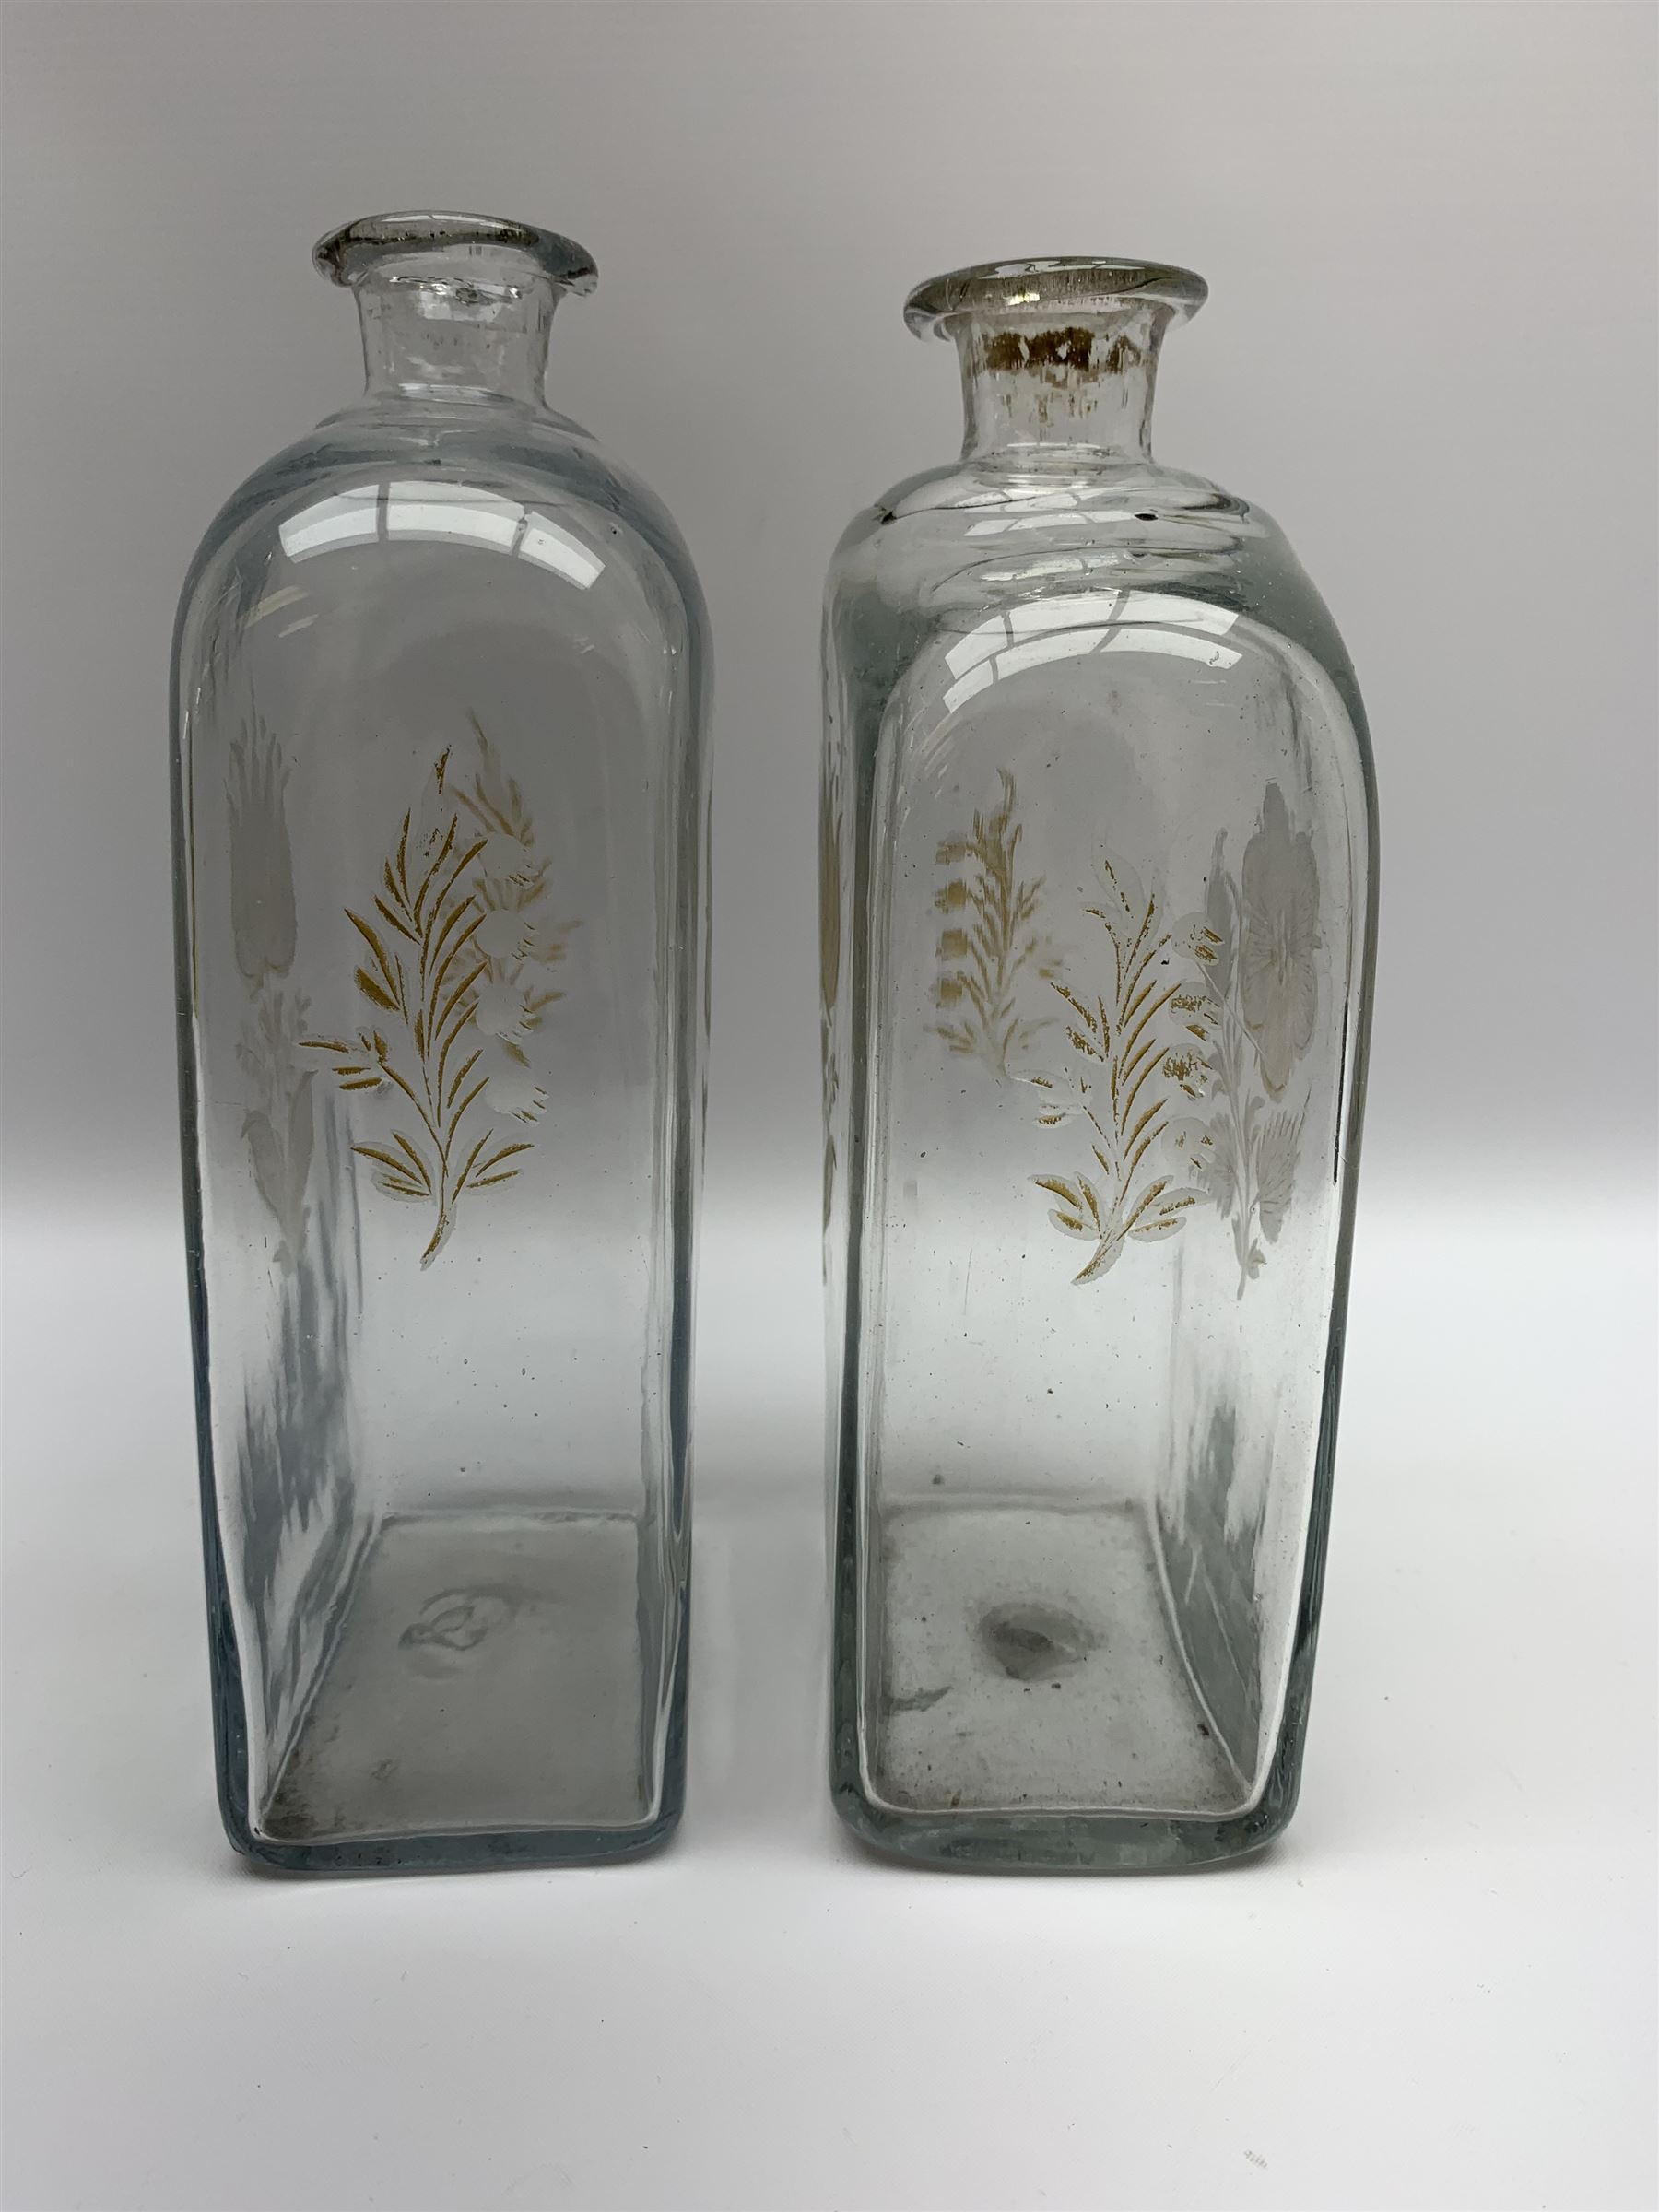 Pair of Georgian glass spirit decanters - Image 2 of 6